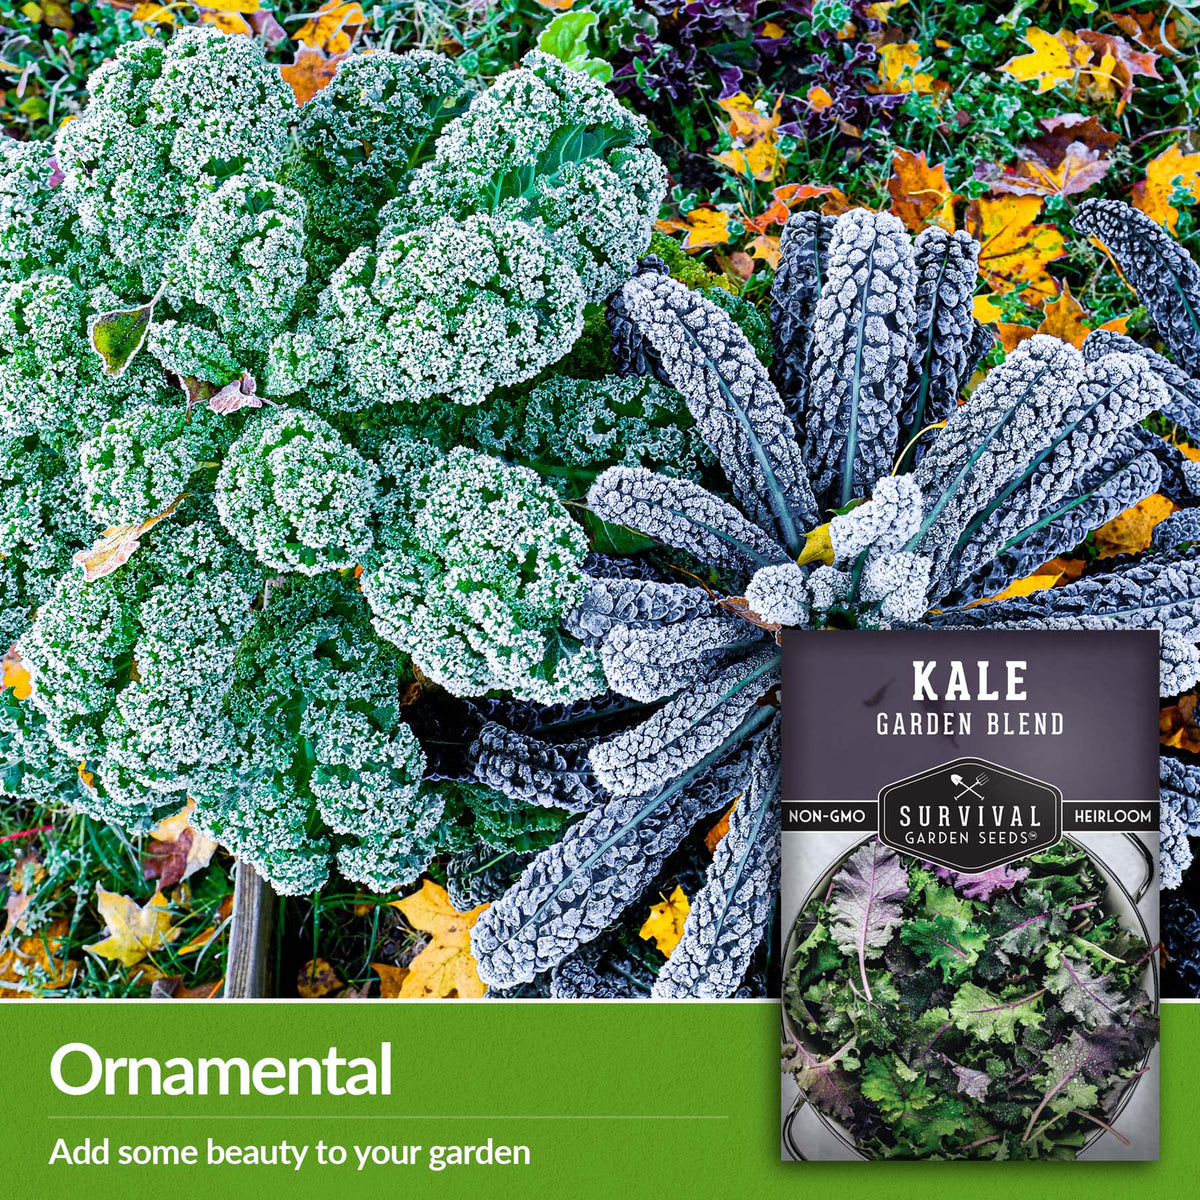 Garden Blend Kale can add ornamental beauty to your garden